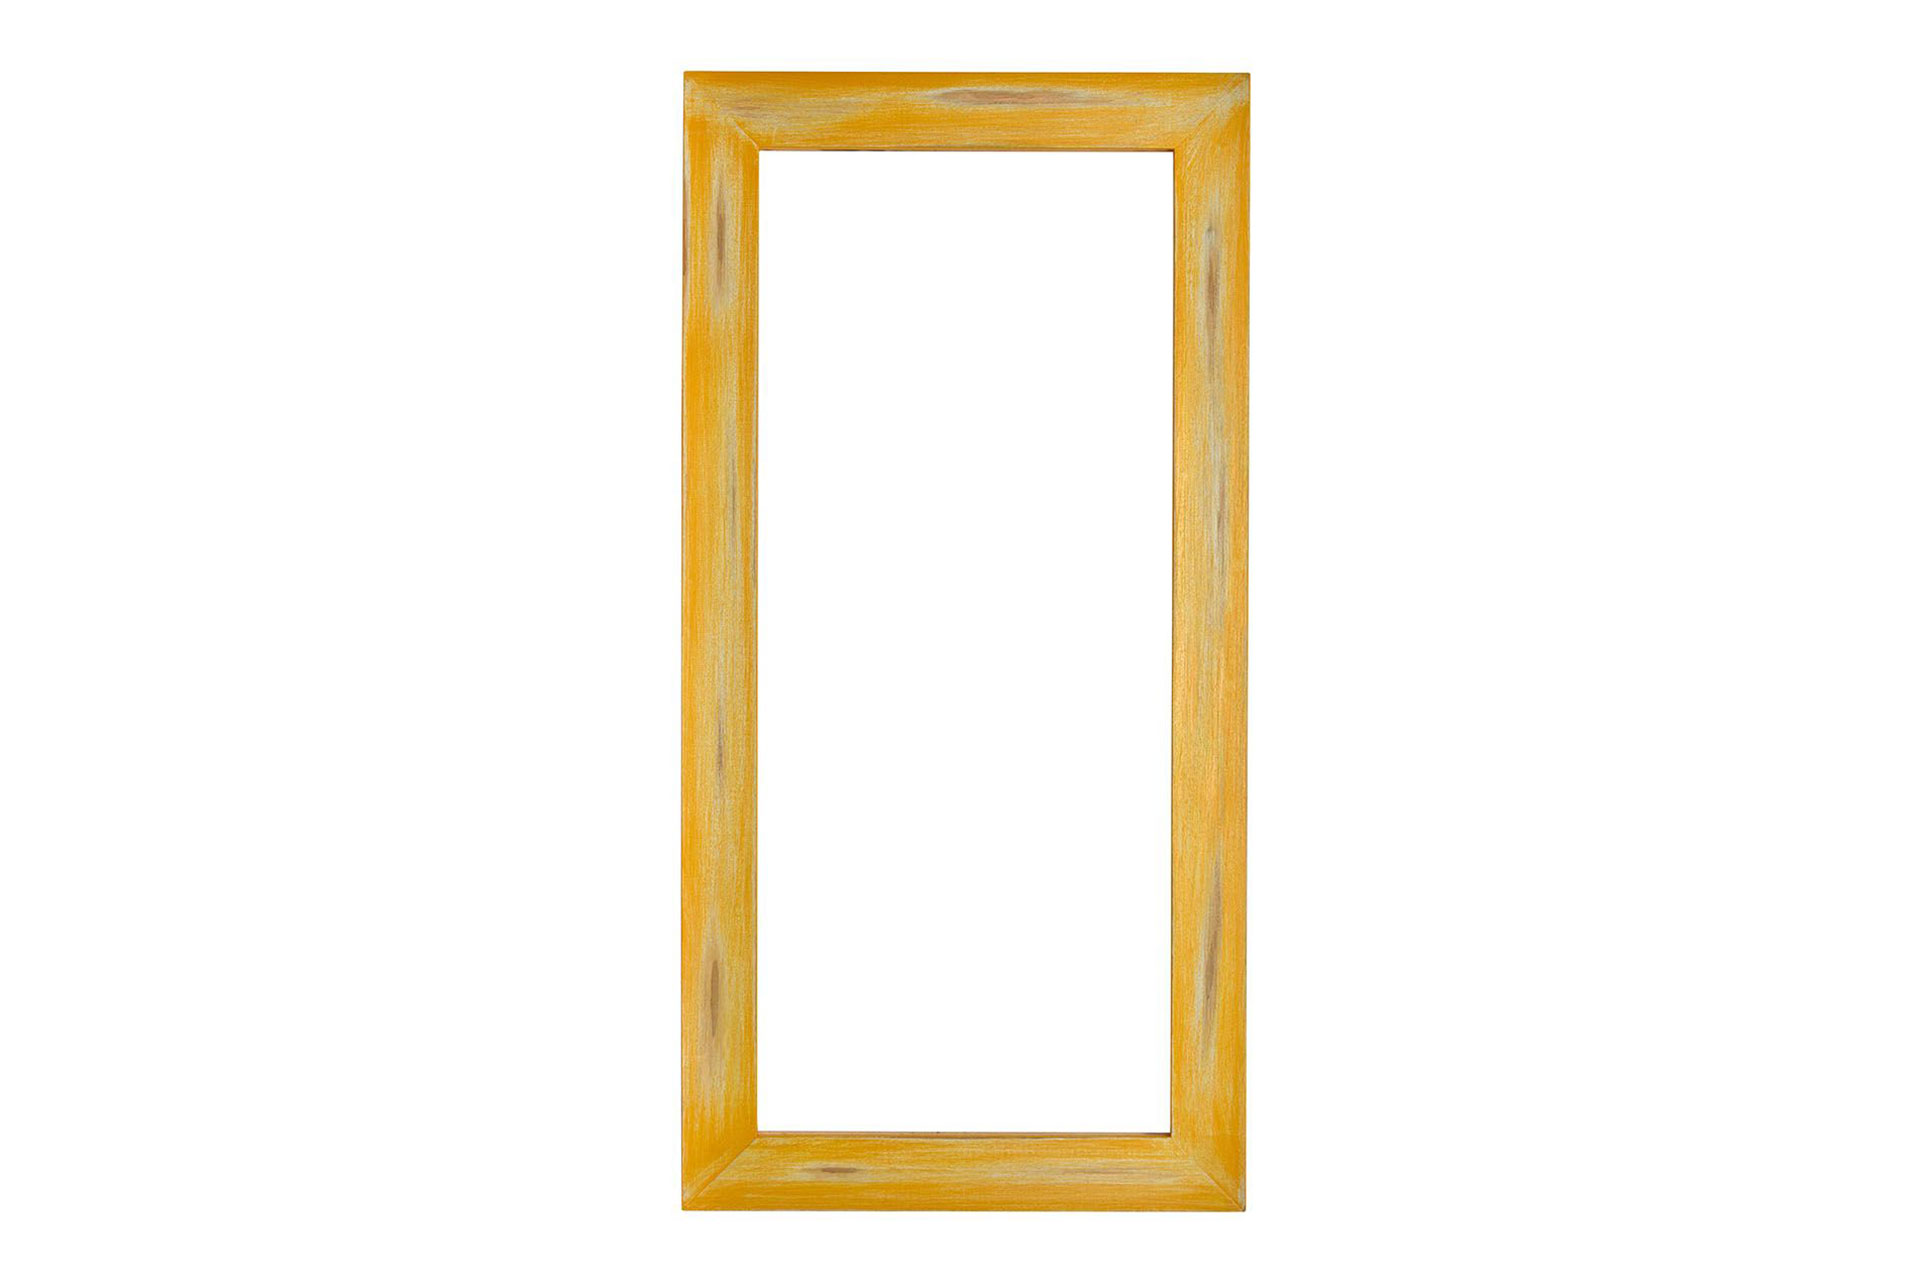 Modell Etta, rechteckig, Farbe: gelb, modern, Herstellung: ASR-Rahmendesign Material: Holz, Spiegel Facette, Ansicht Front